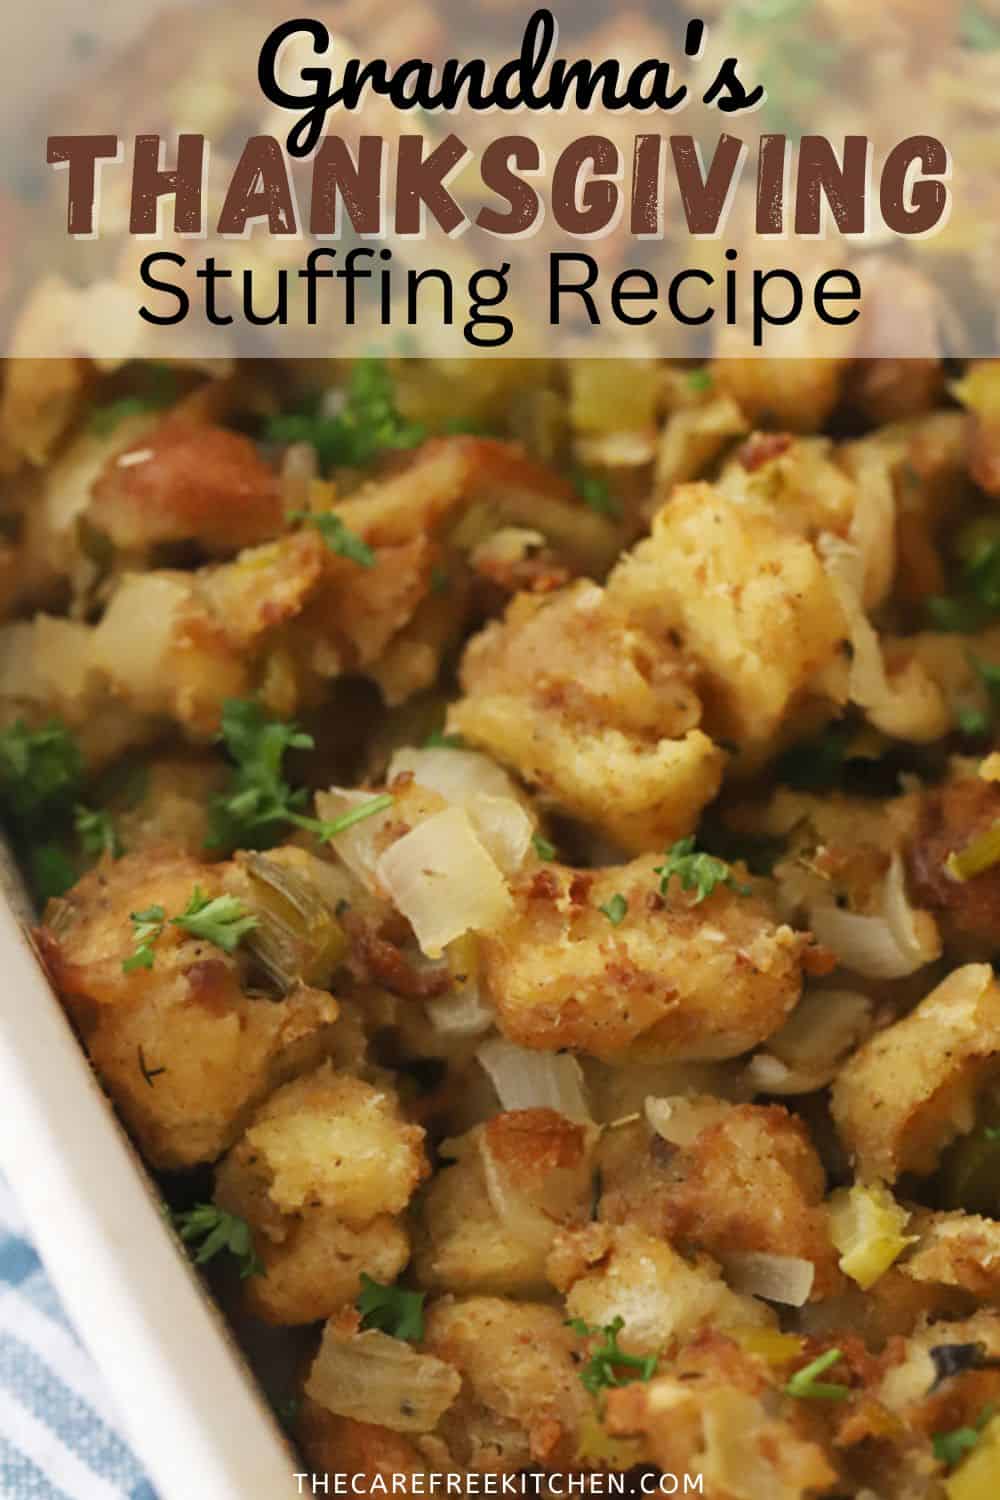 Grandma’s Thanksgiving Stuffing Recipe {Video} - The Carefree Kitchen